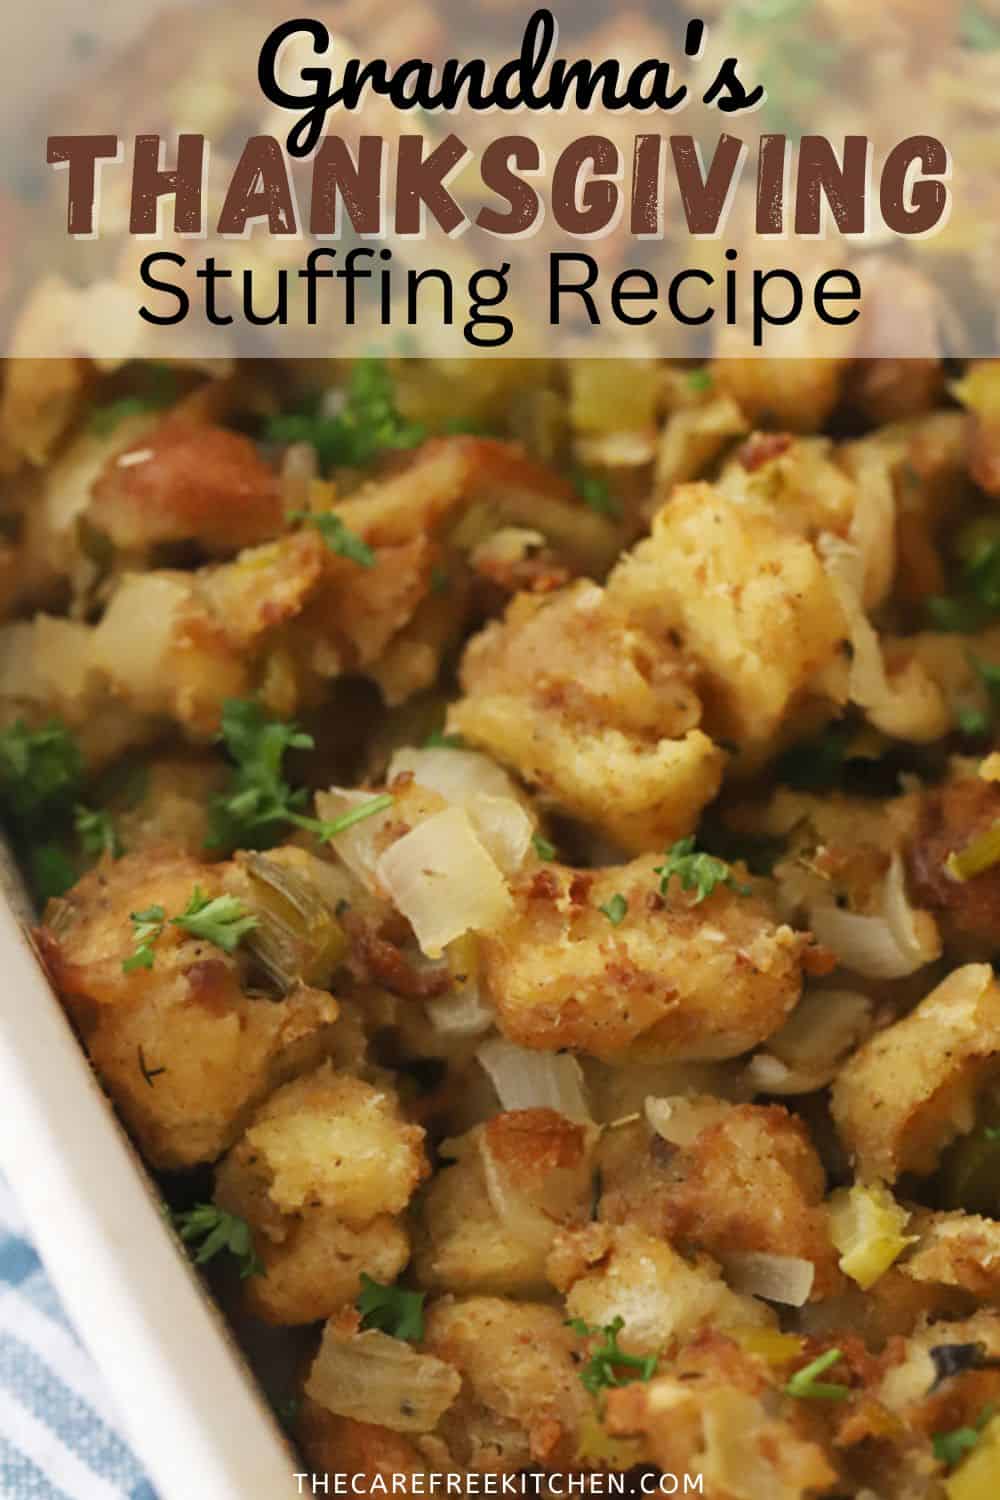 Grandma’s Thanksgiving Stuffing Recipe {Video} - The Carefree Kitchen